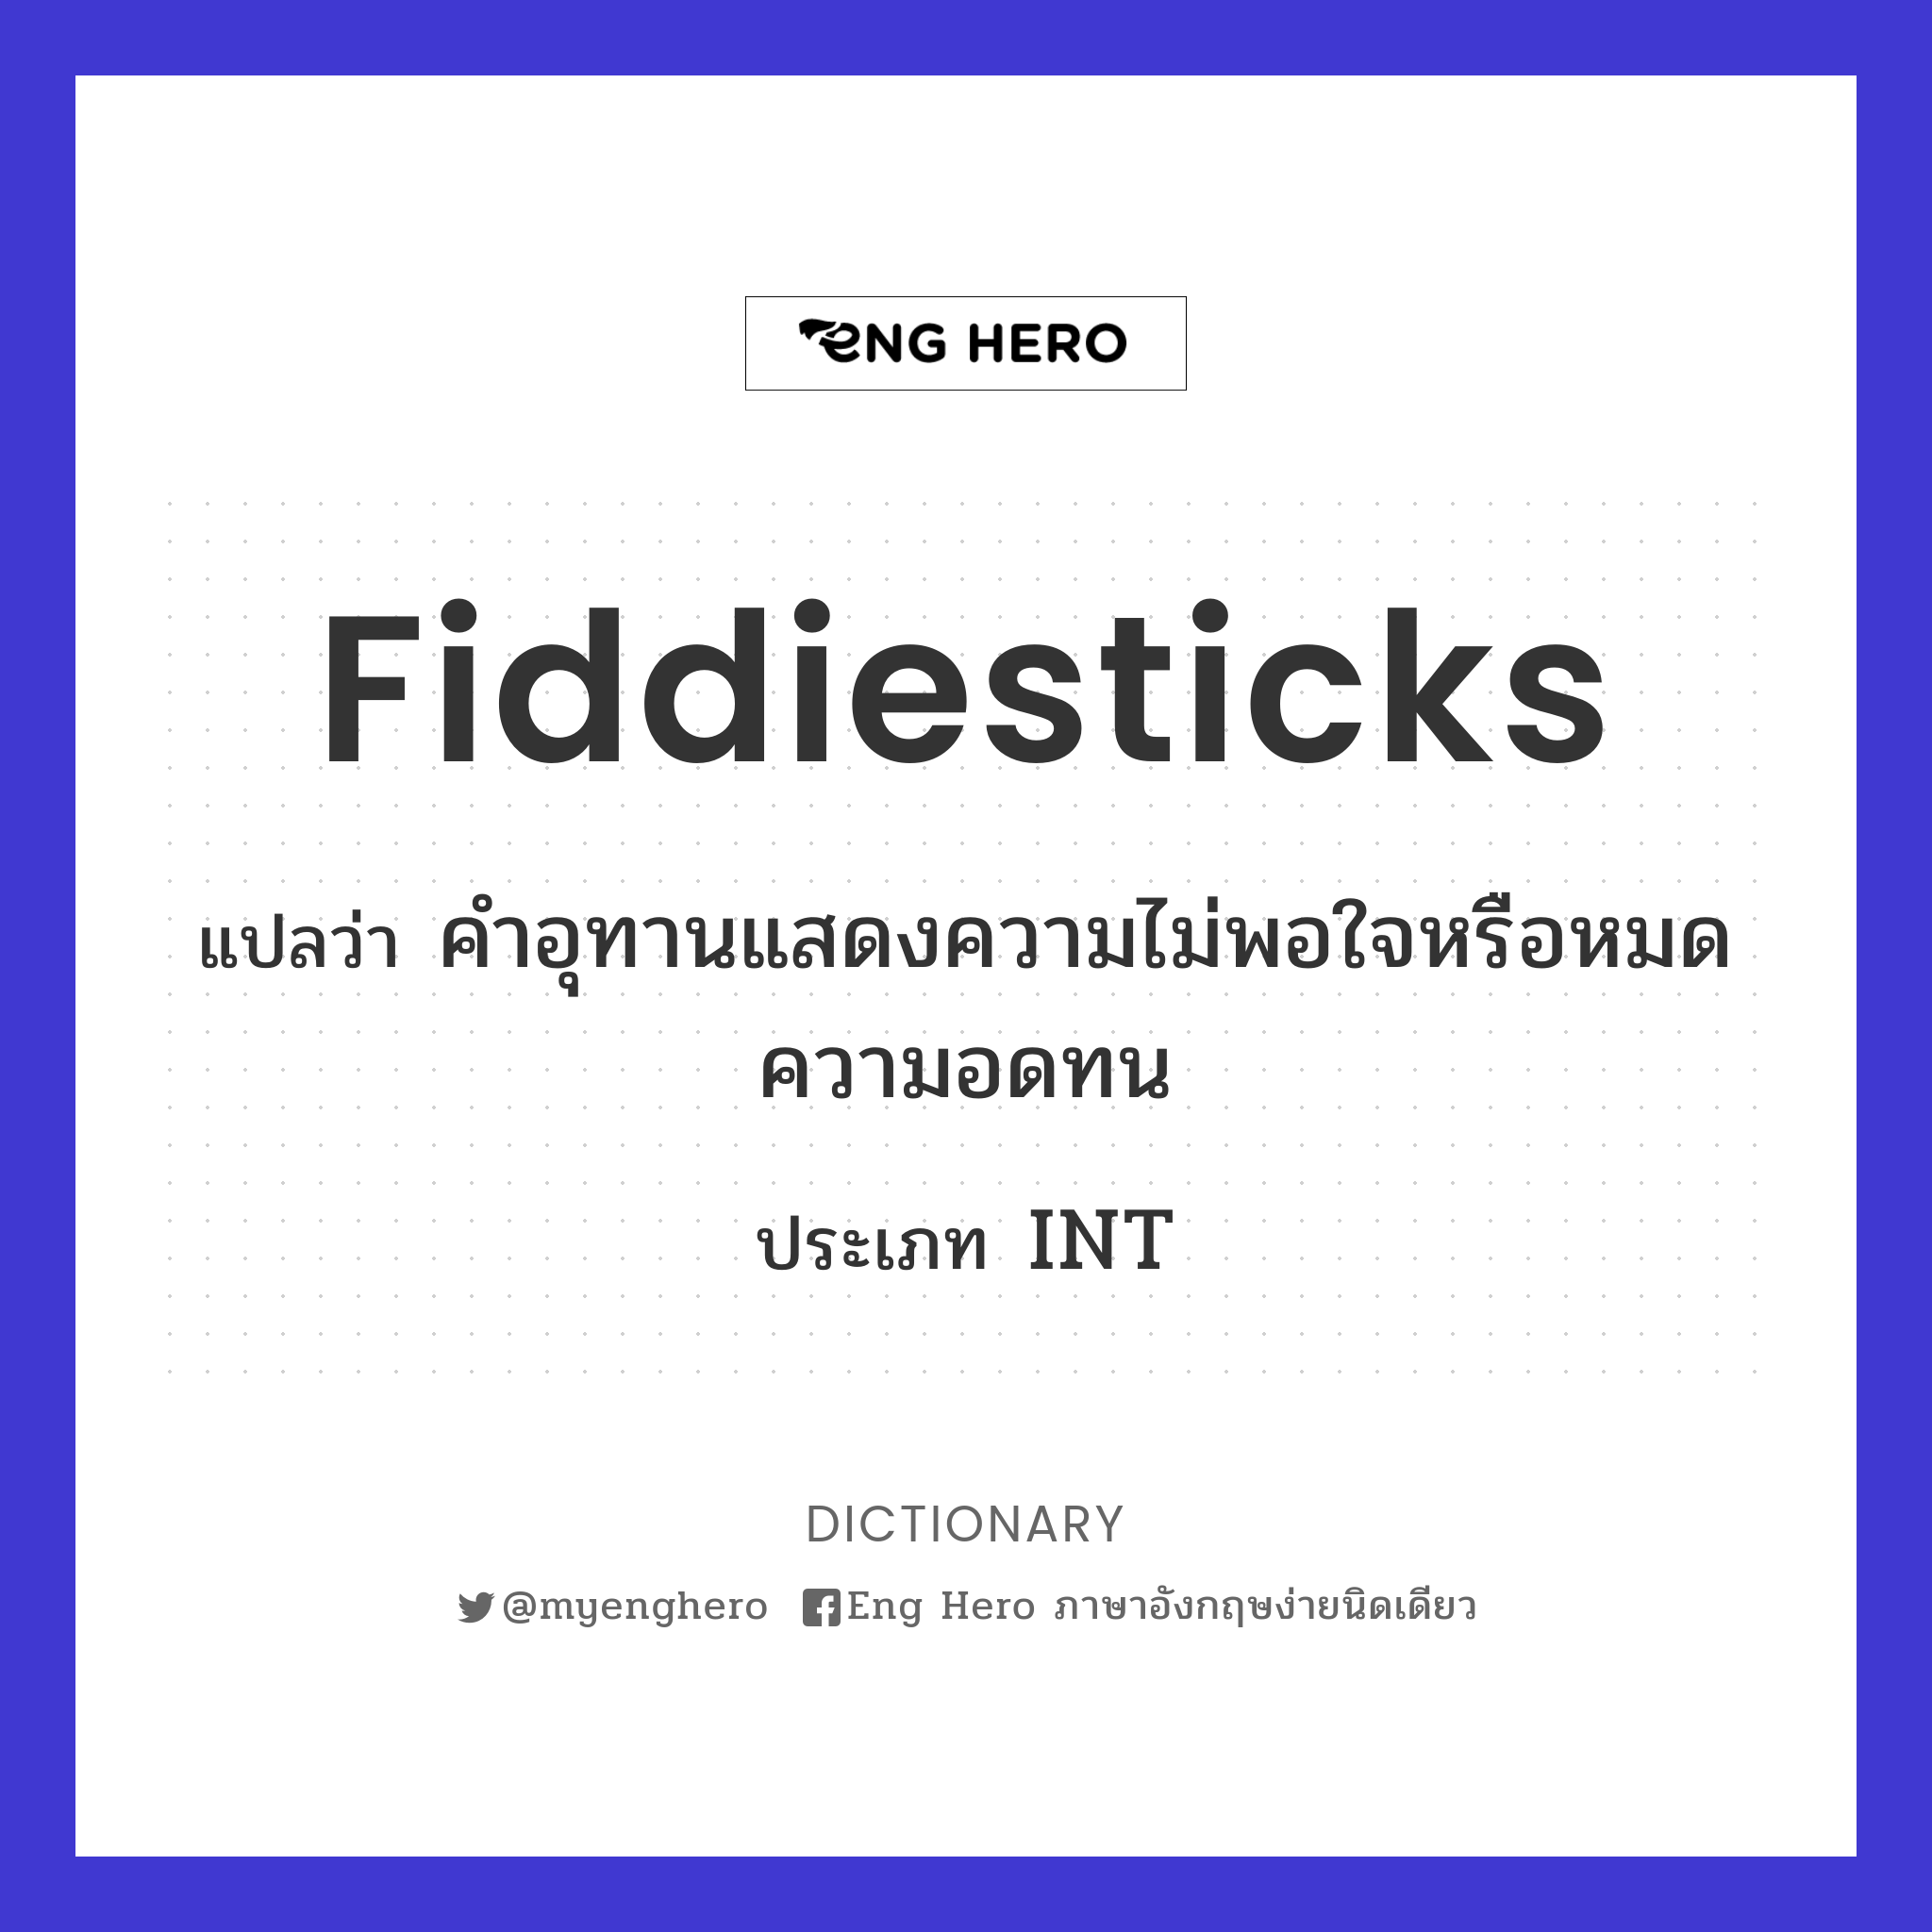 fiddiesticks